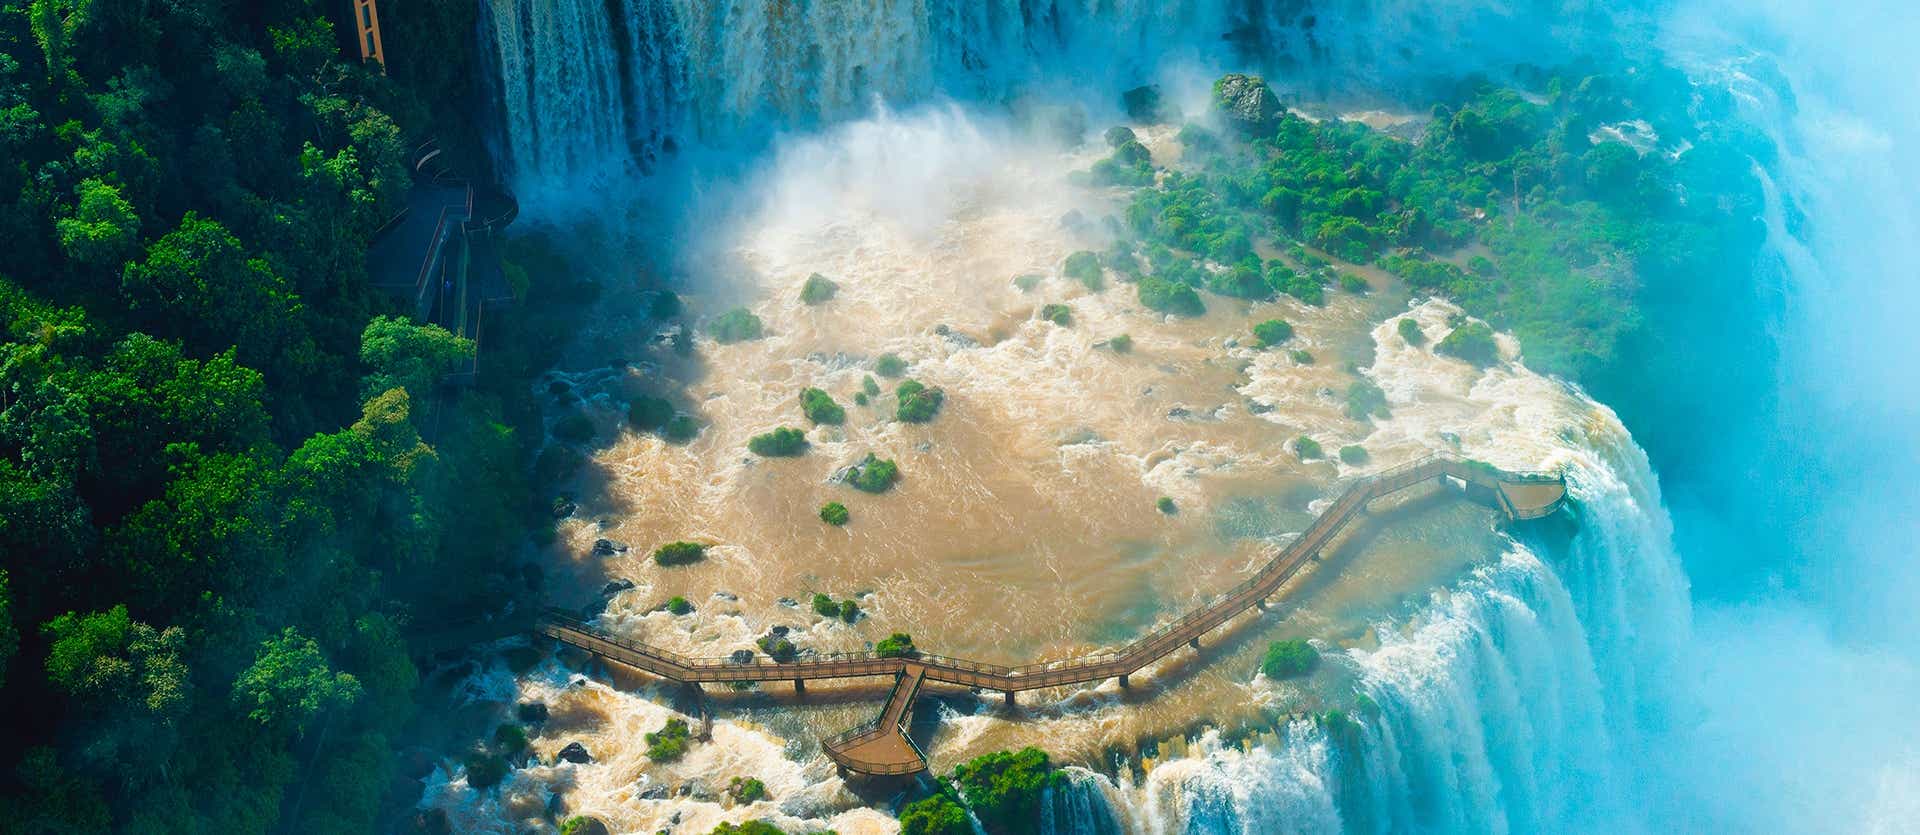 Iguazú Waterfall <span class="iconos separador"></span> Brazil